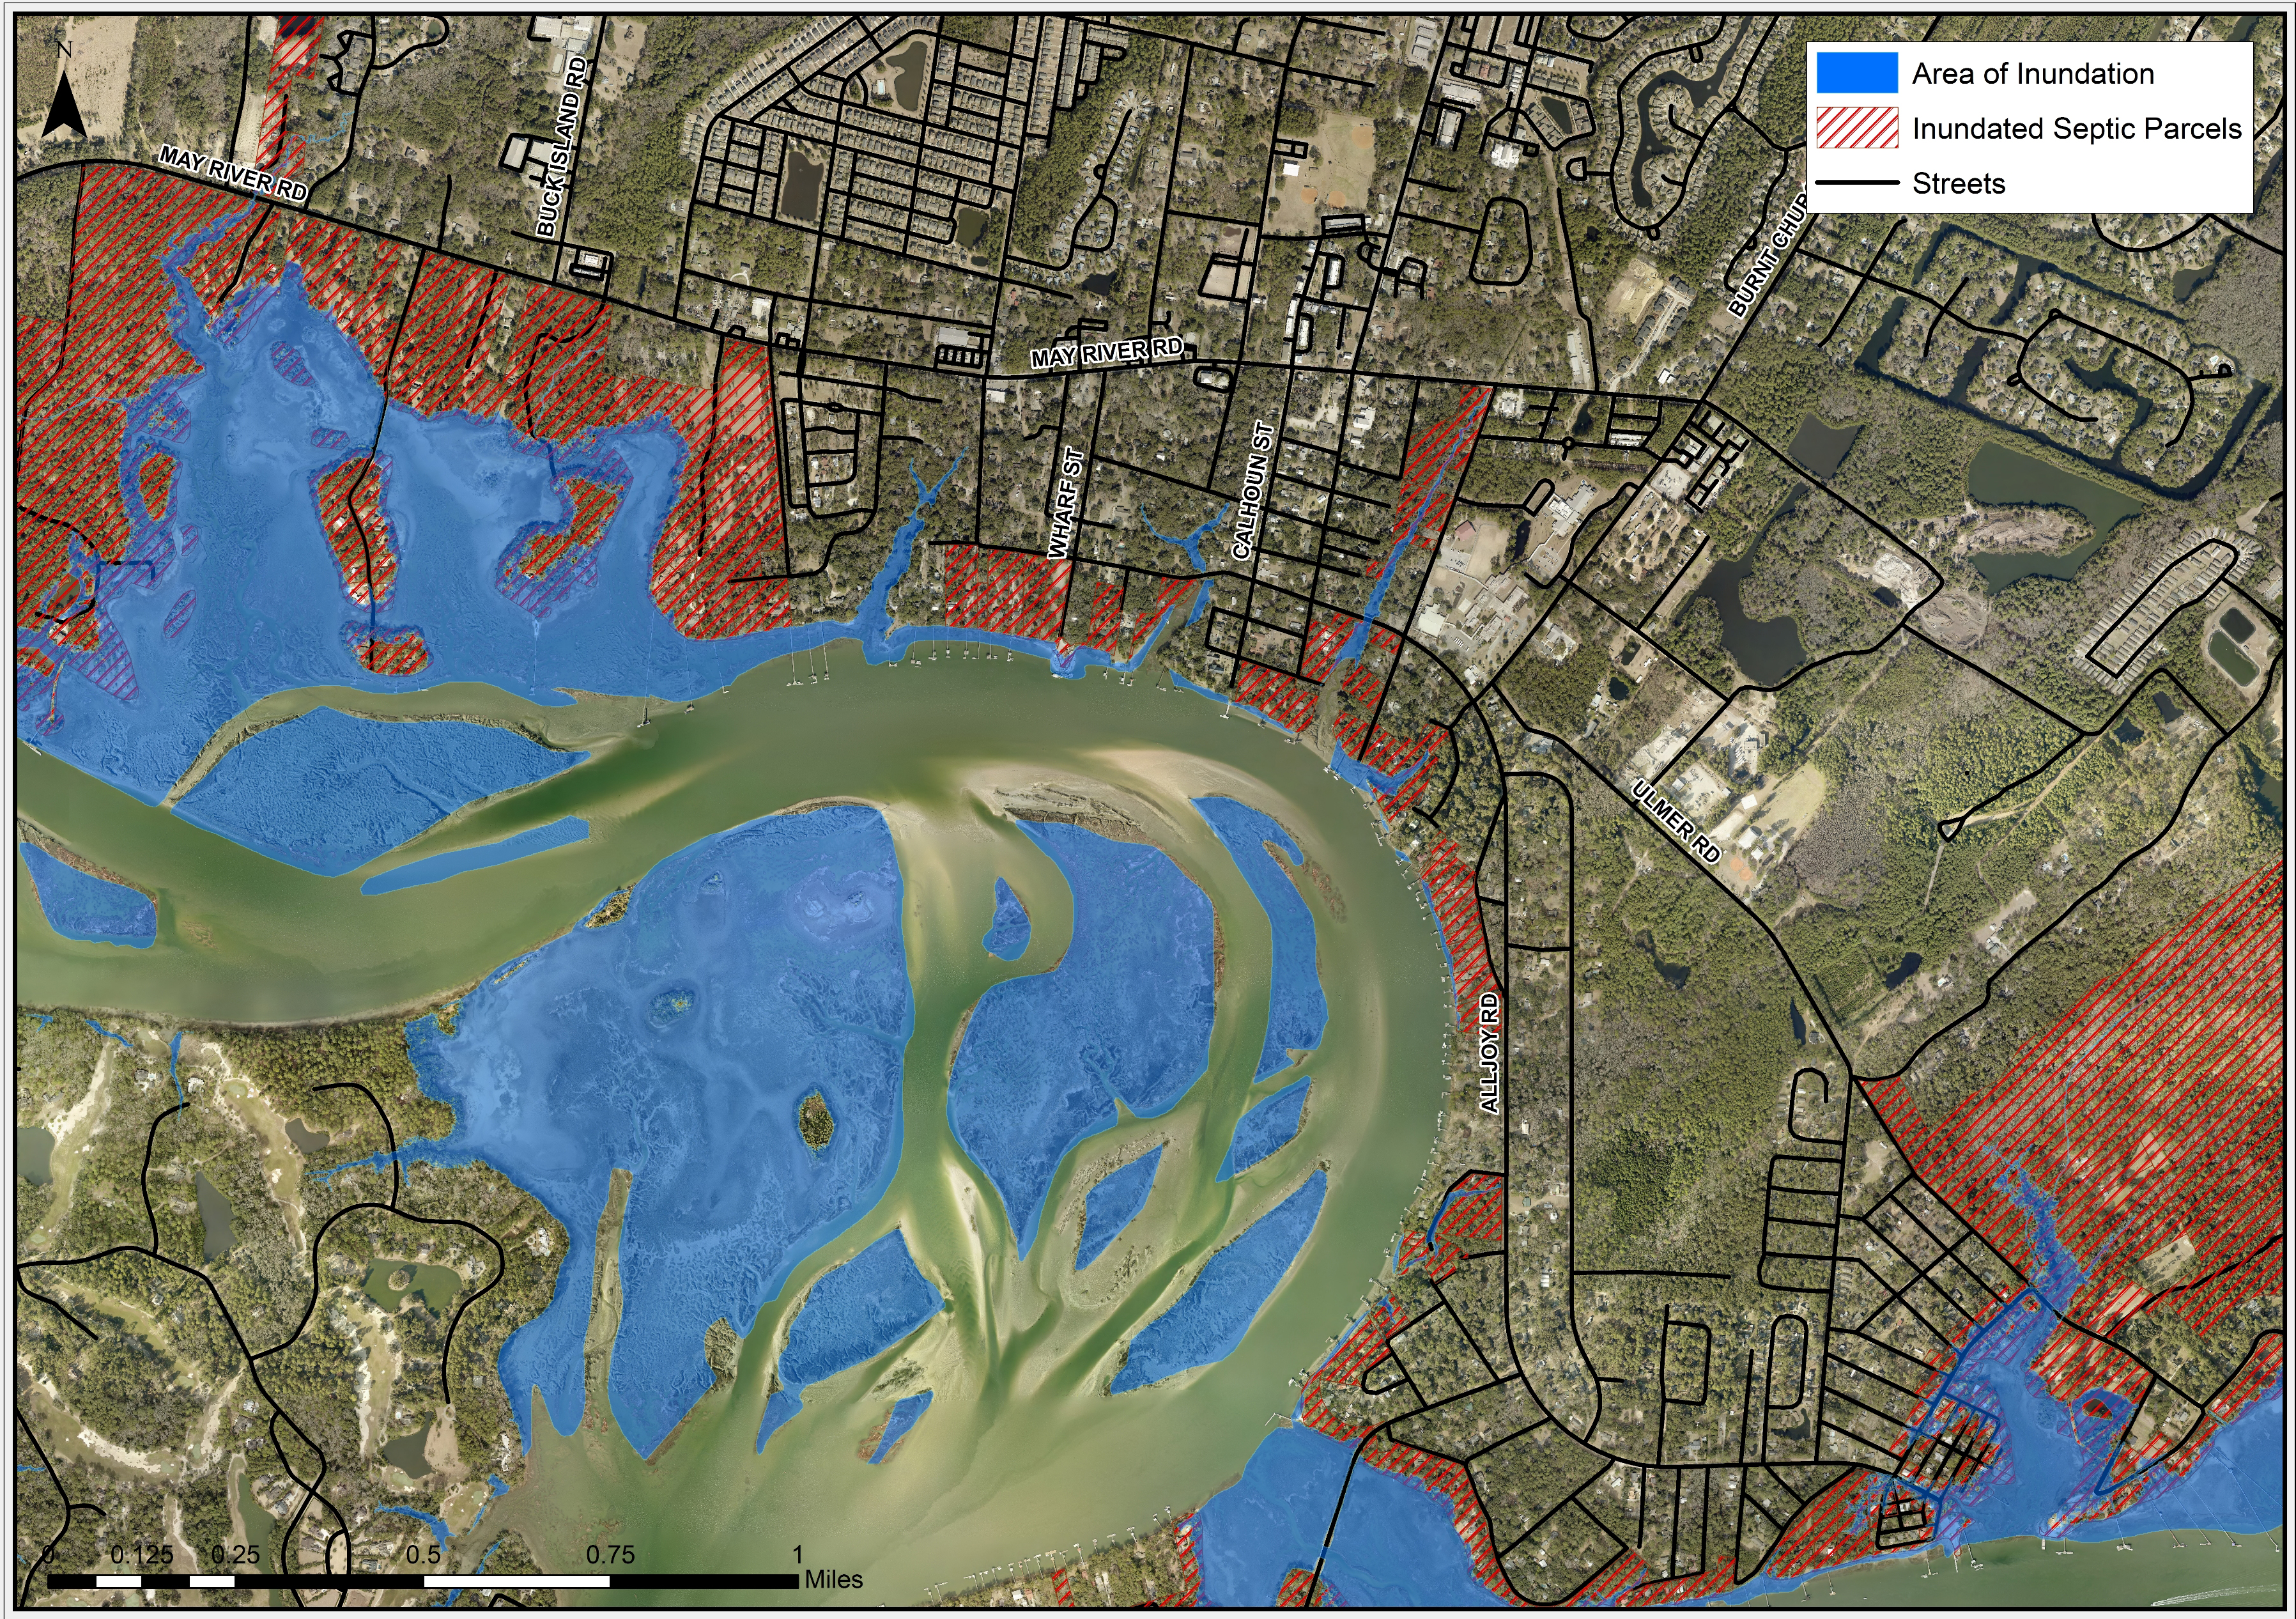 GIS map of Bluffton, South Carolina showing sea Level rise inundation